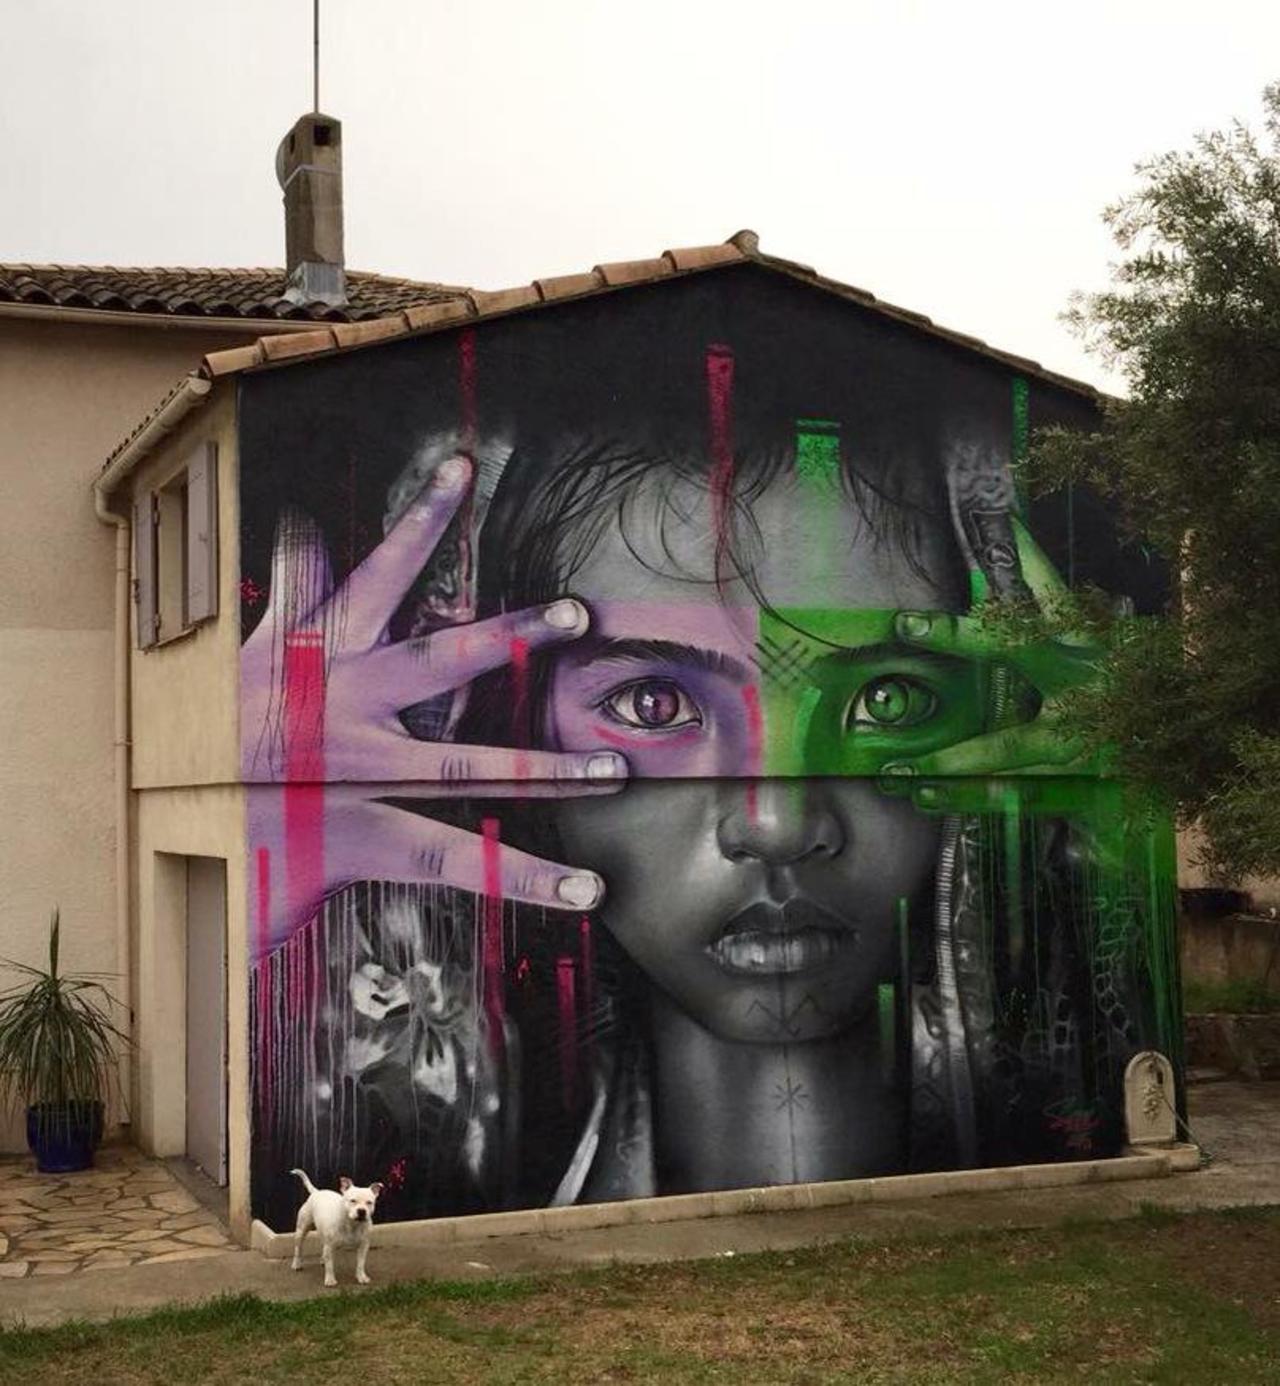 'Open your mind'
Street Art by Guillaume Dusotoit 

#art #arte #graffiti #streetart http://t.co/b1GGhgBtBO